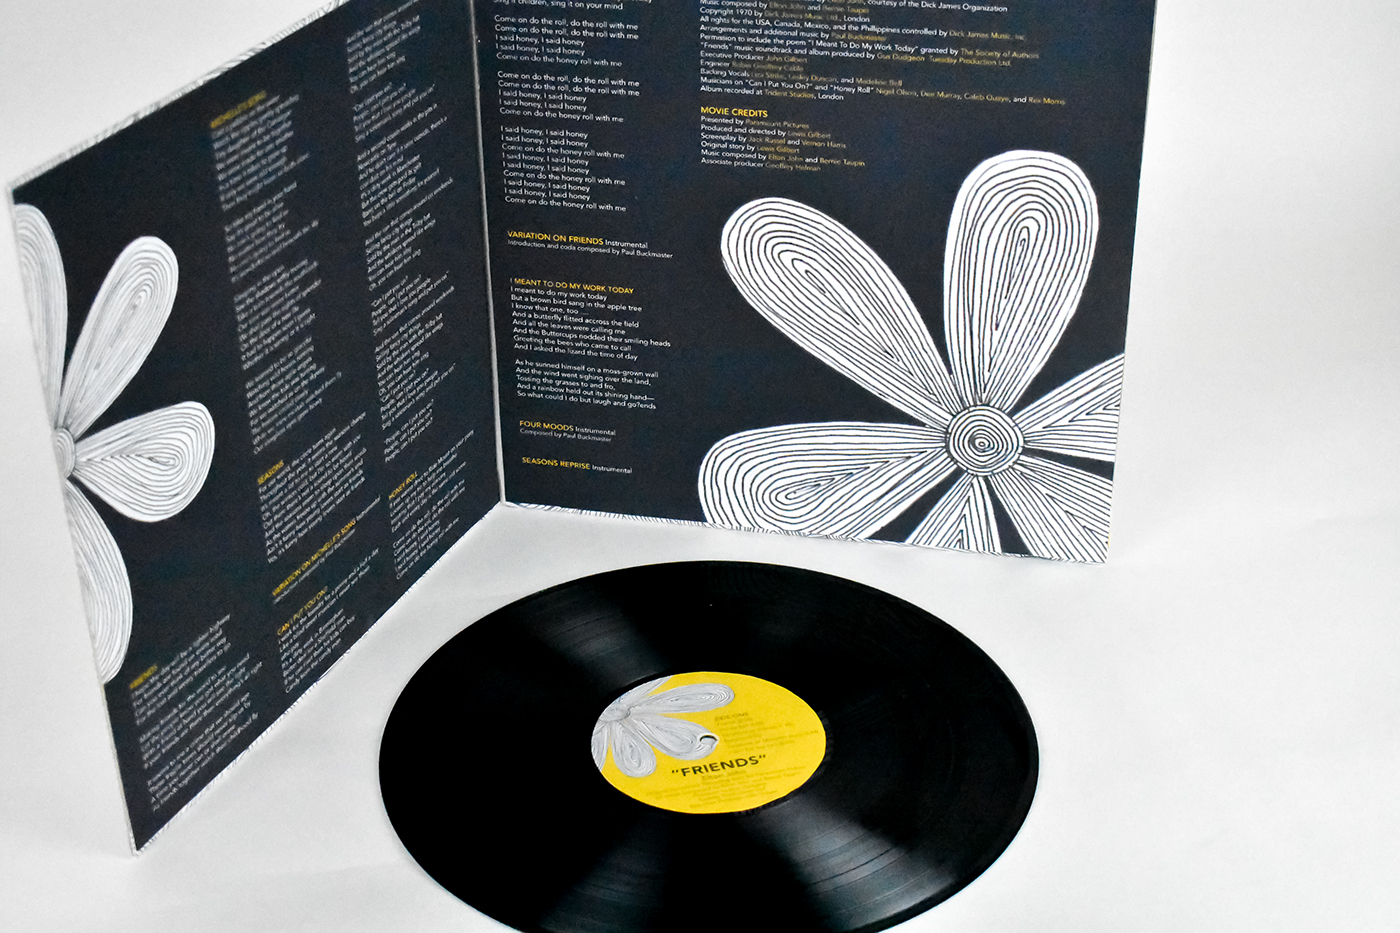 friends Album vinyl record handdrawn redesign